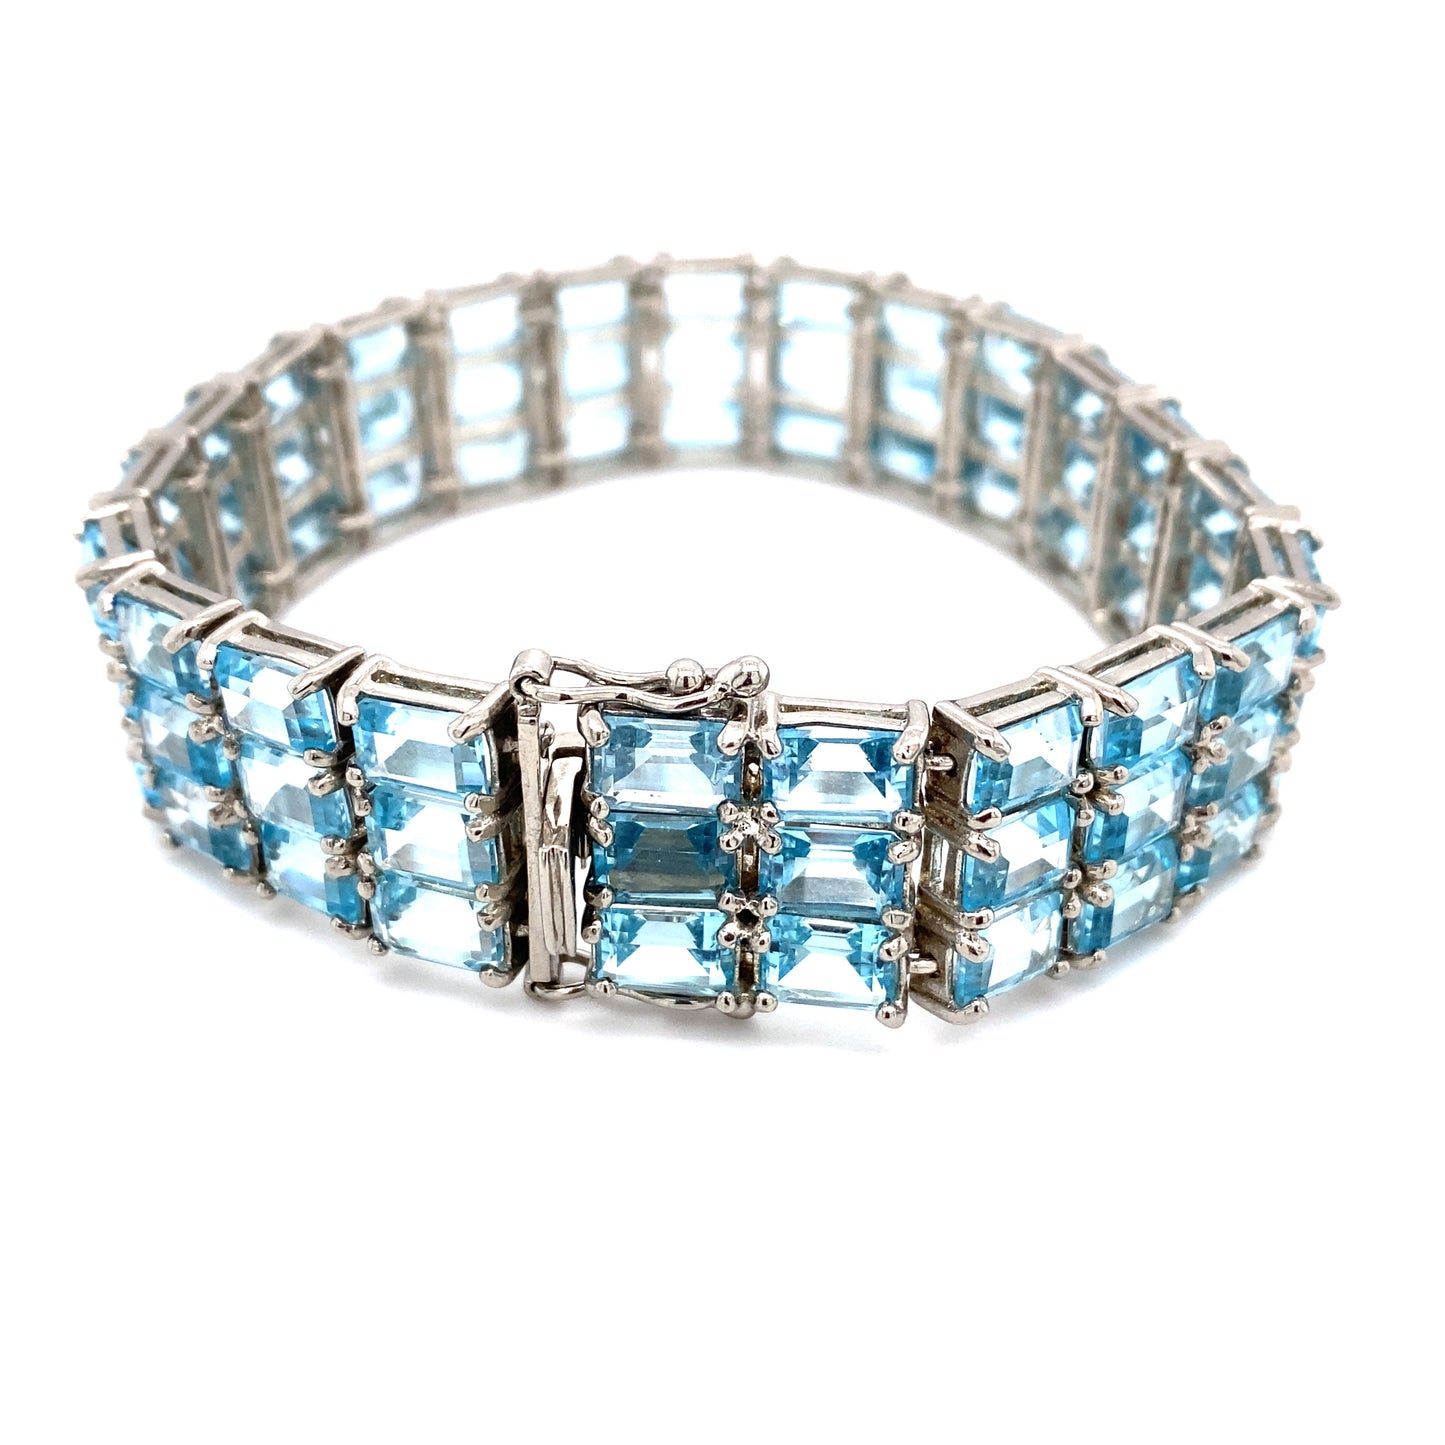 Circa 1960s 66 Carat Blue Topaz Three Row Bracelet in Sterling Silver